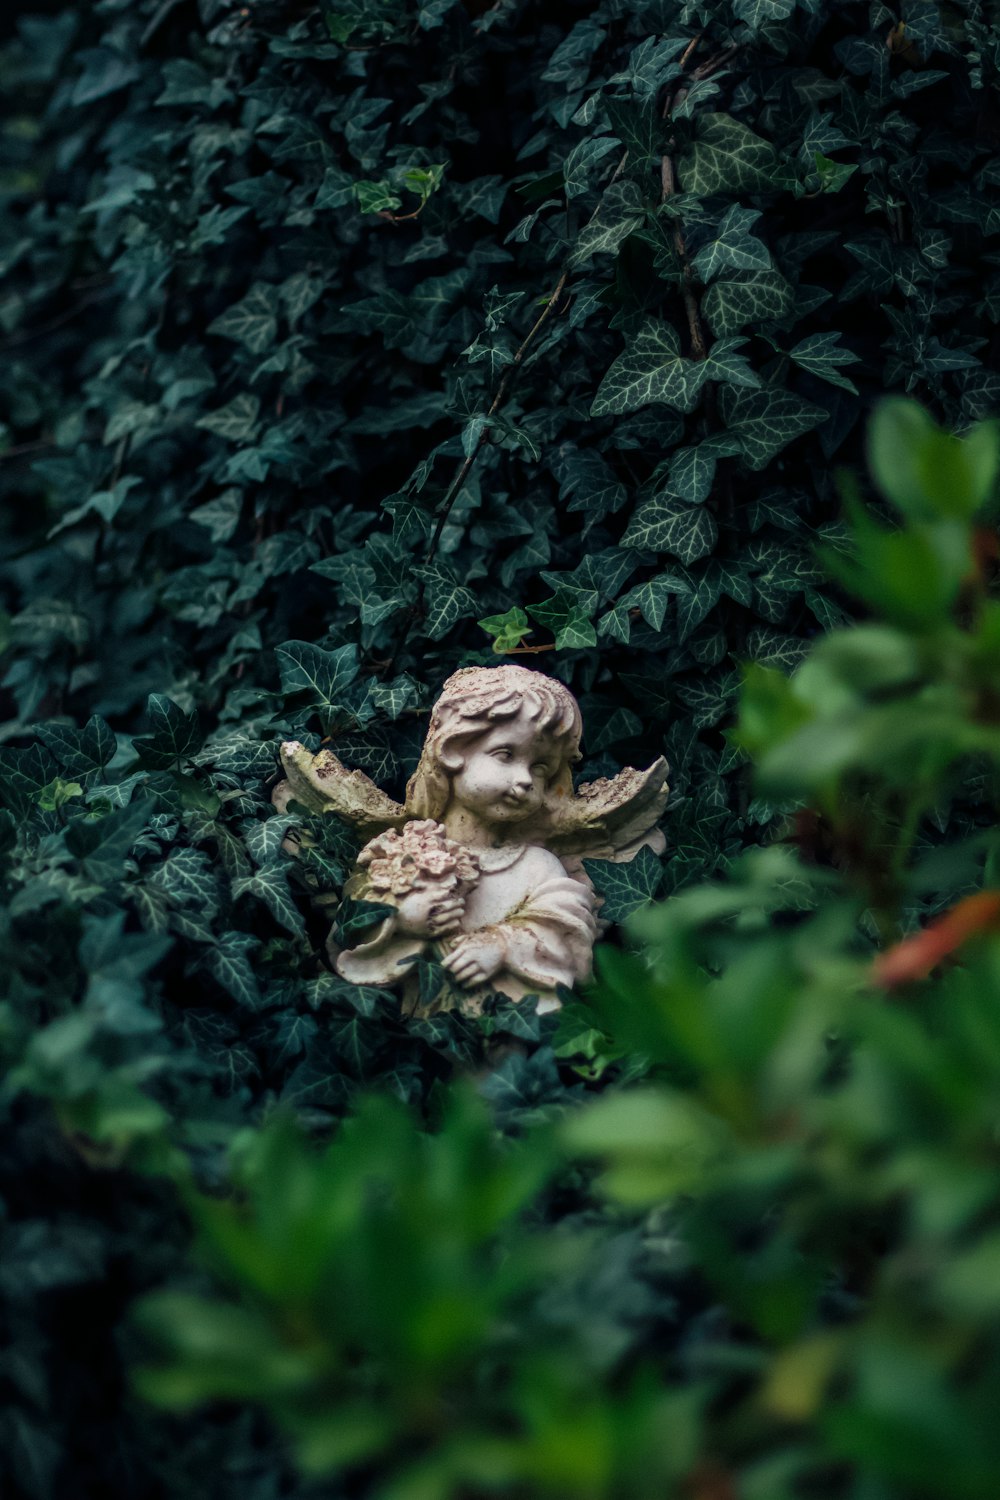 angel ceramic figurine on green plant